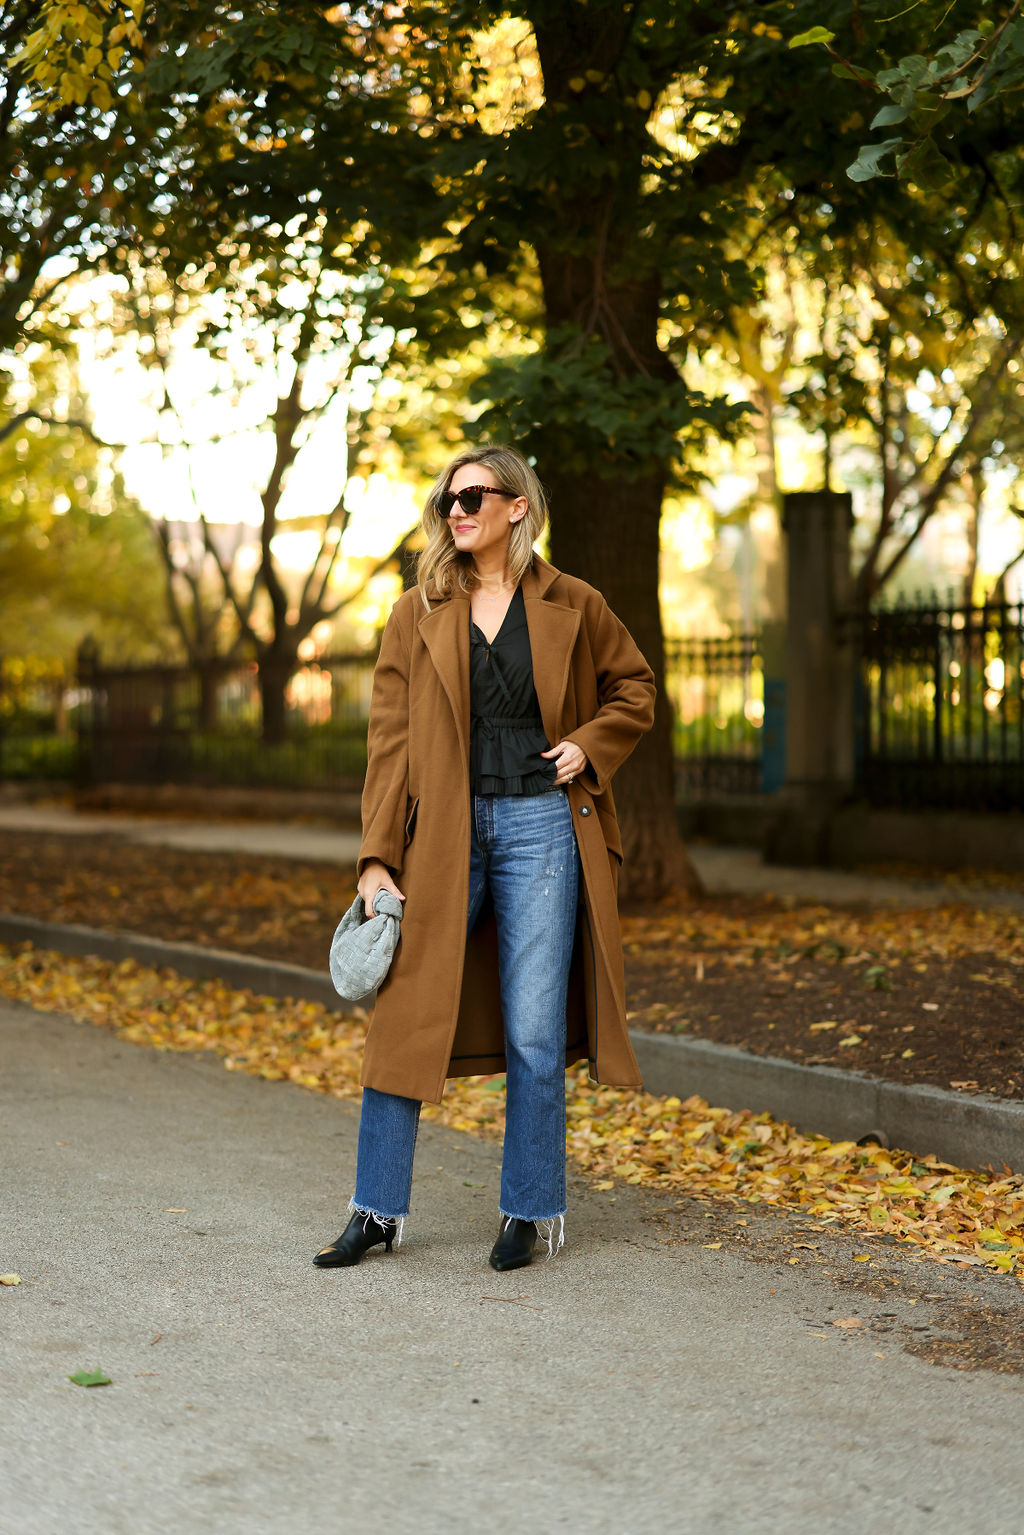 woman wearing black top, denim jeans, and coat